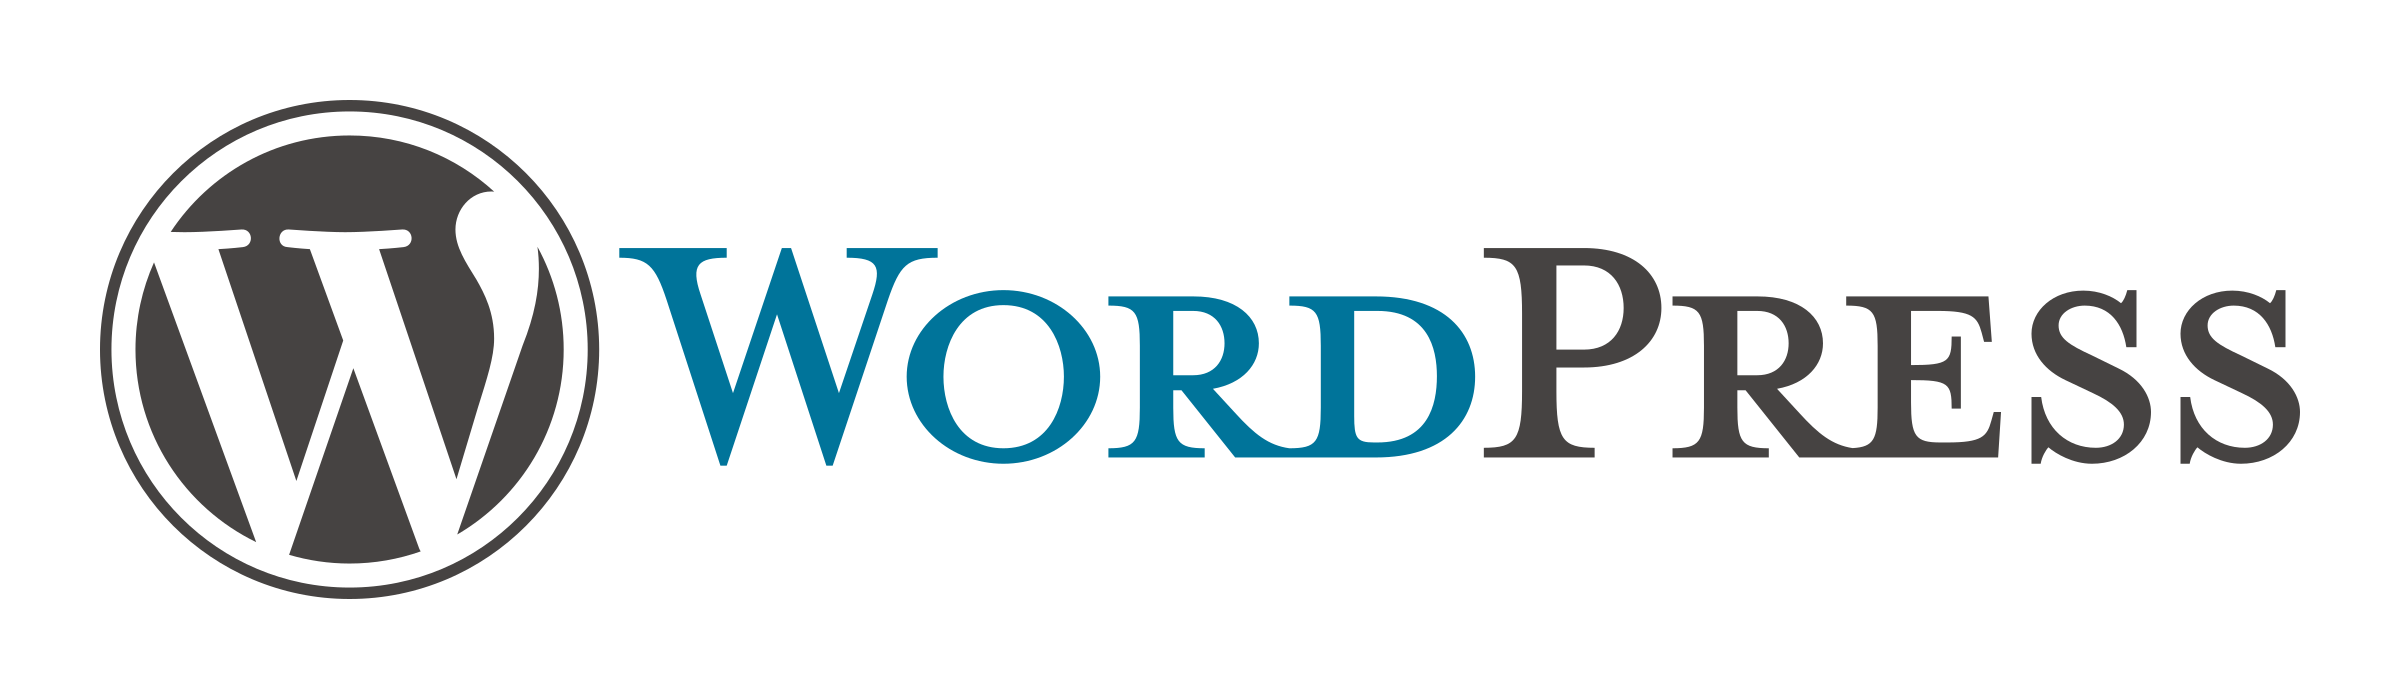 wordpress-logo-png-transparent